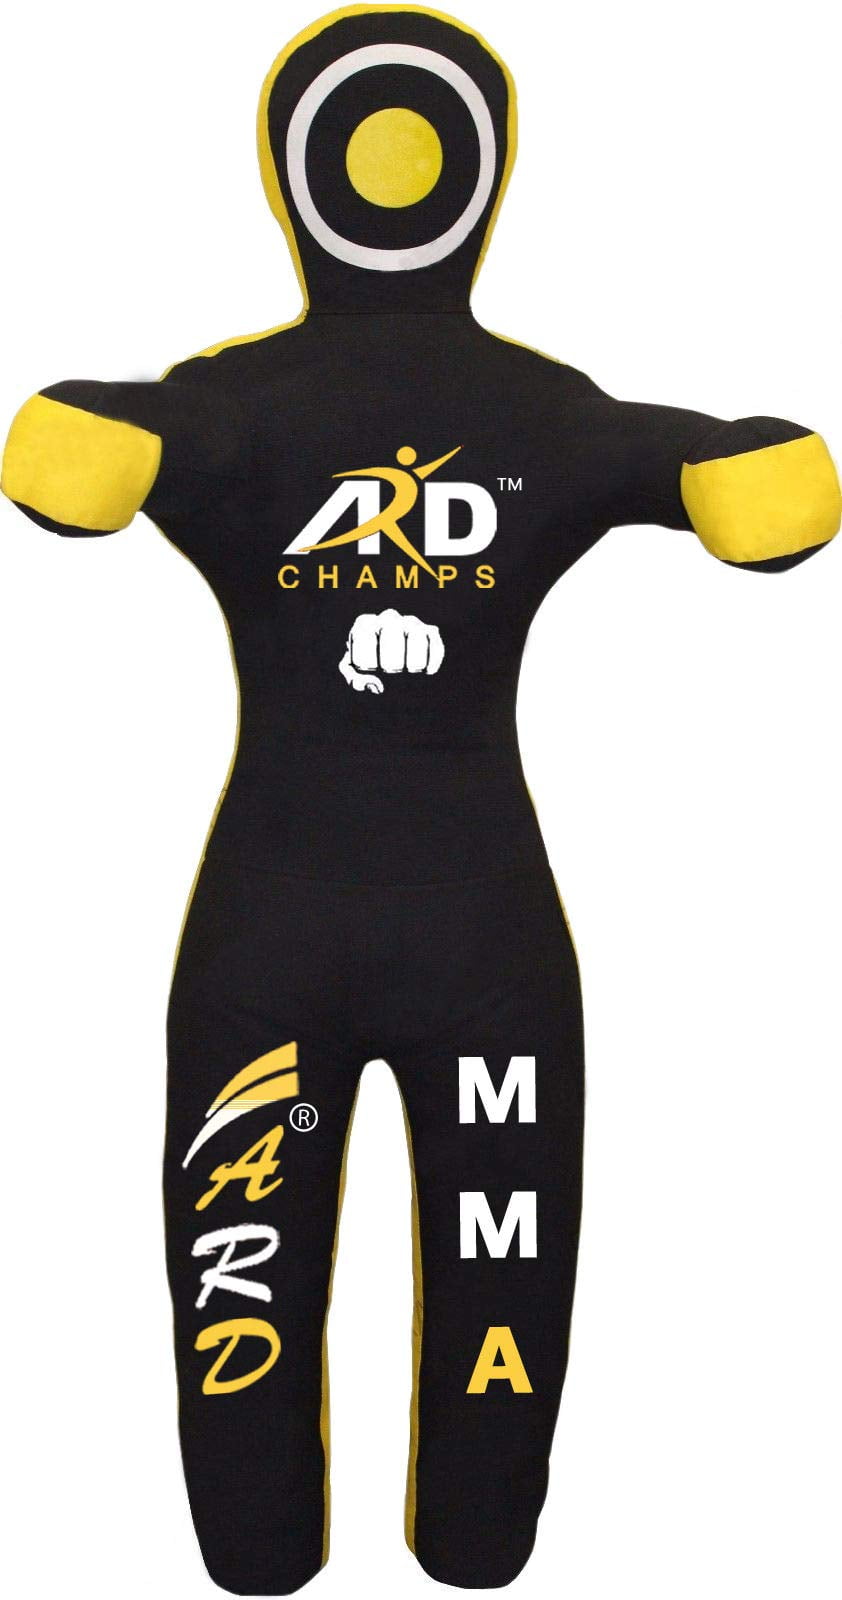 2Fit™ Brazilian Grappling Canvas Straight Dummy MMA Wrestling Judo Black/Yellow 